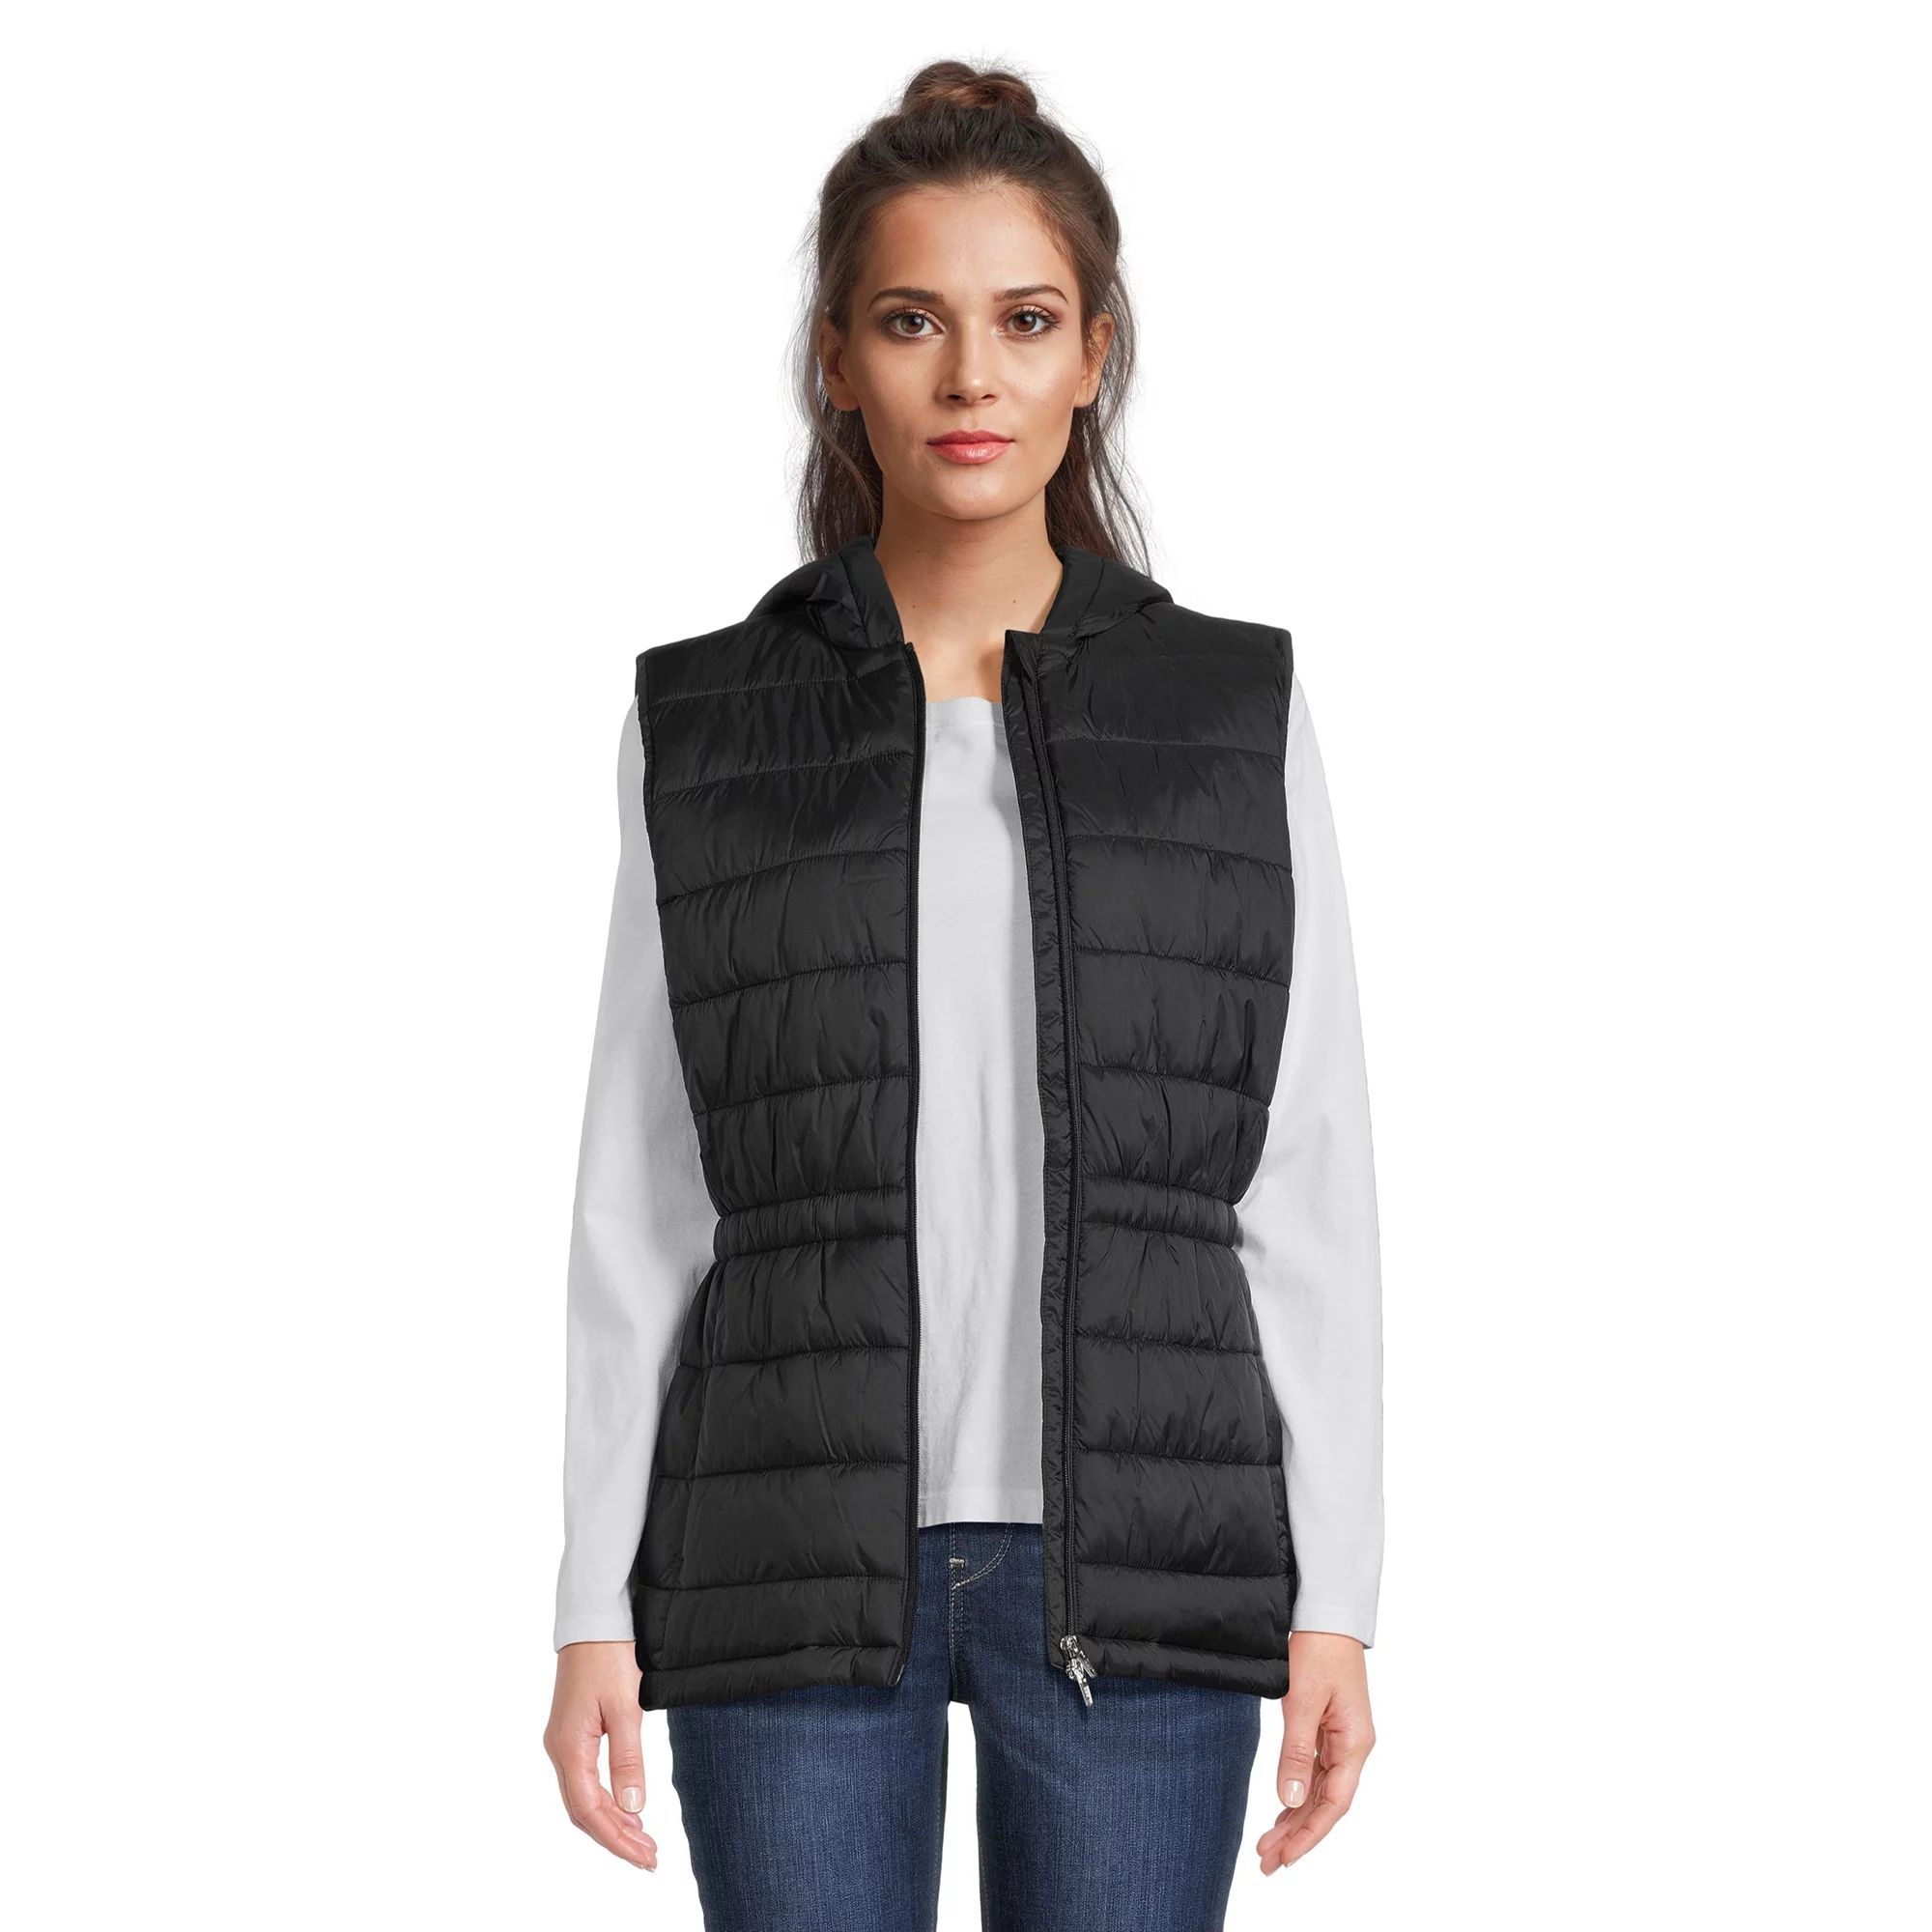 Swiss Tech Women's Hooded Vest with Cinched Waist, Sizes XS-3X | Walmart (US)